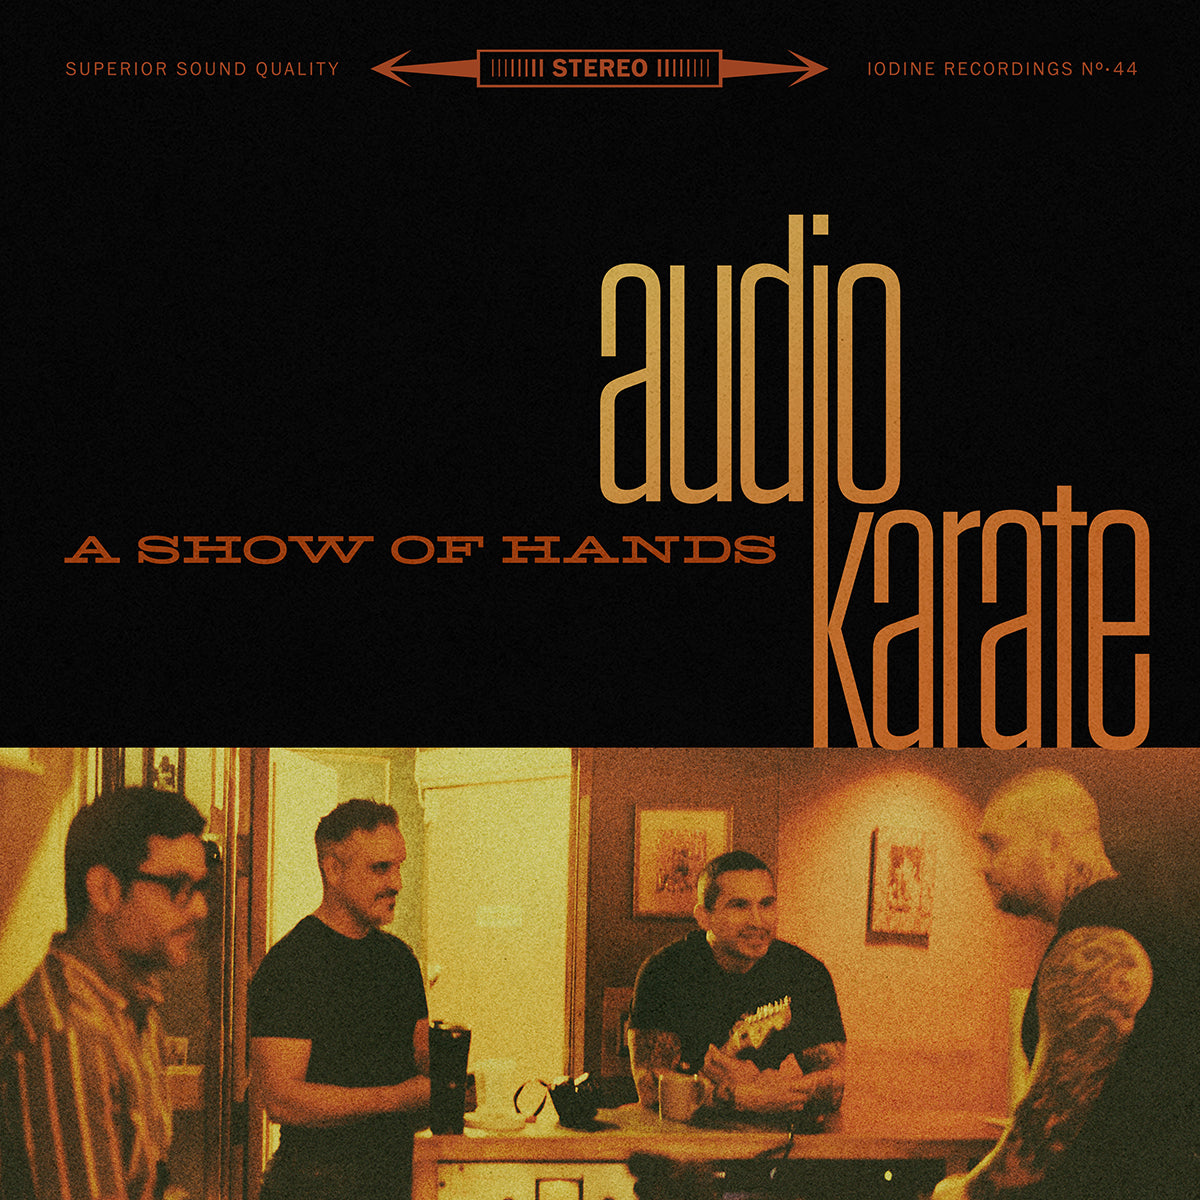 AUDIO KARATE "A Show Of Hands" 7"